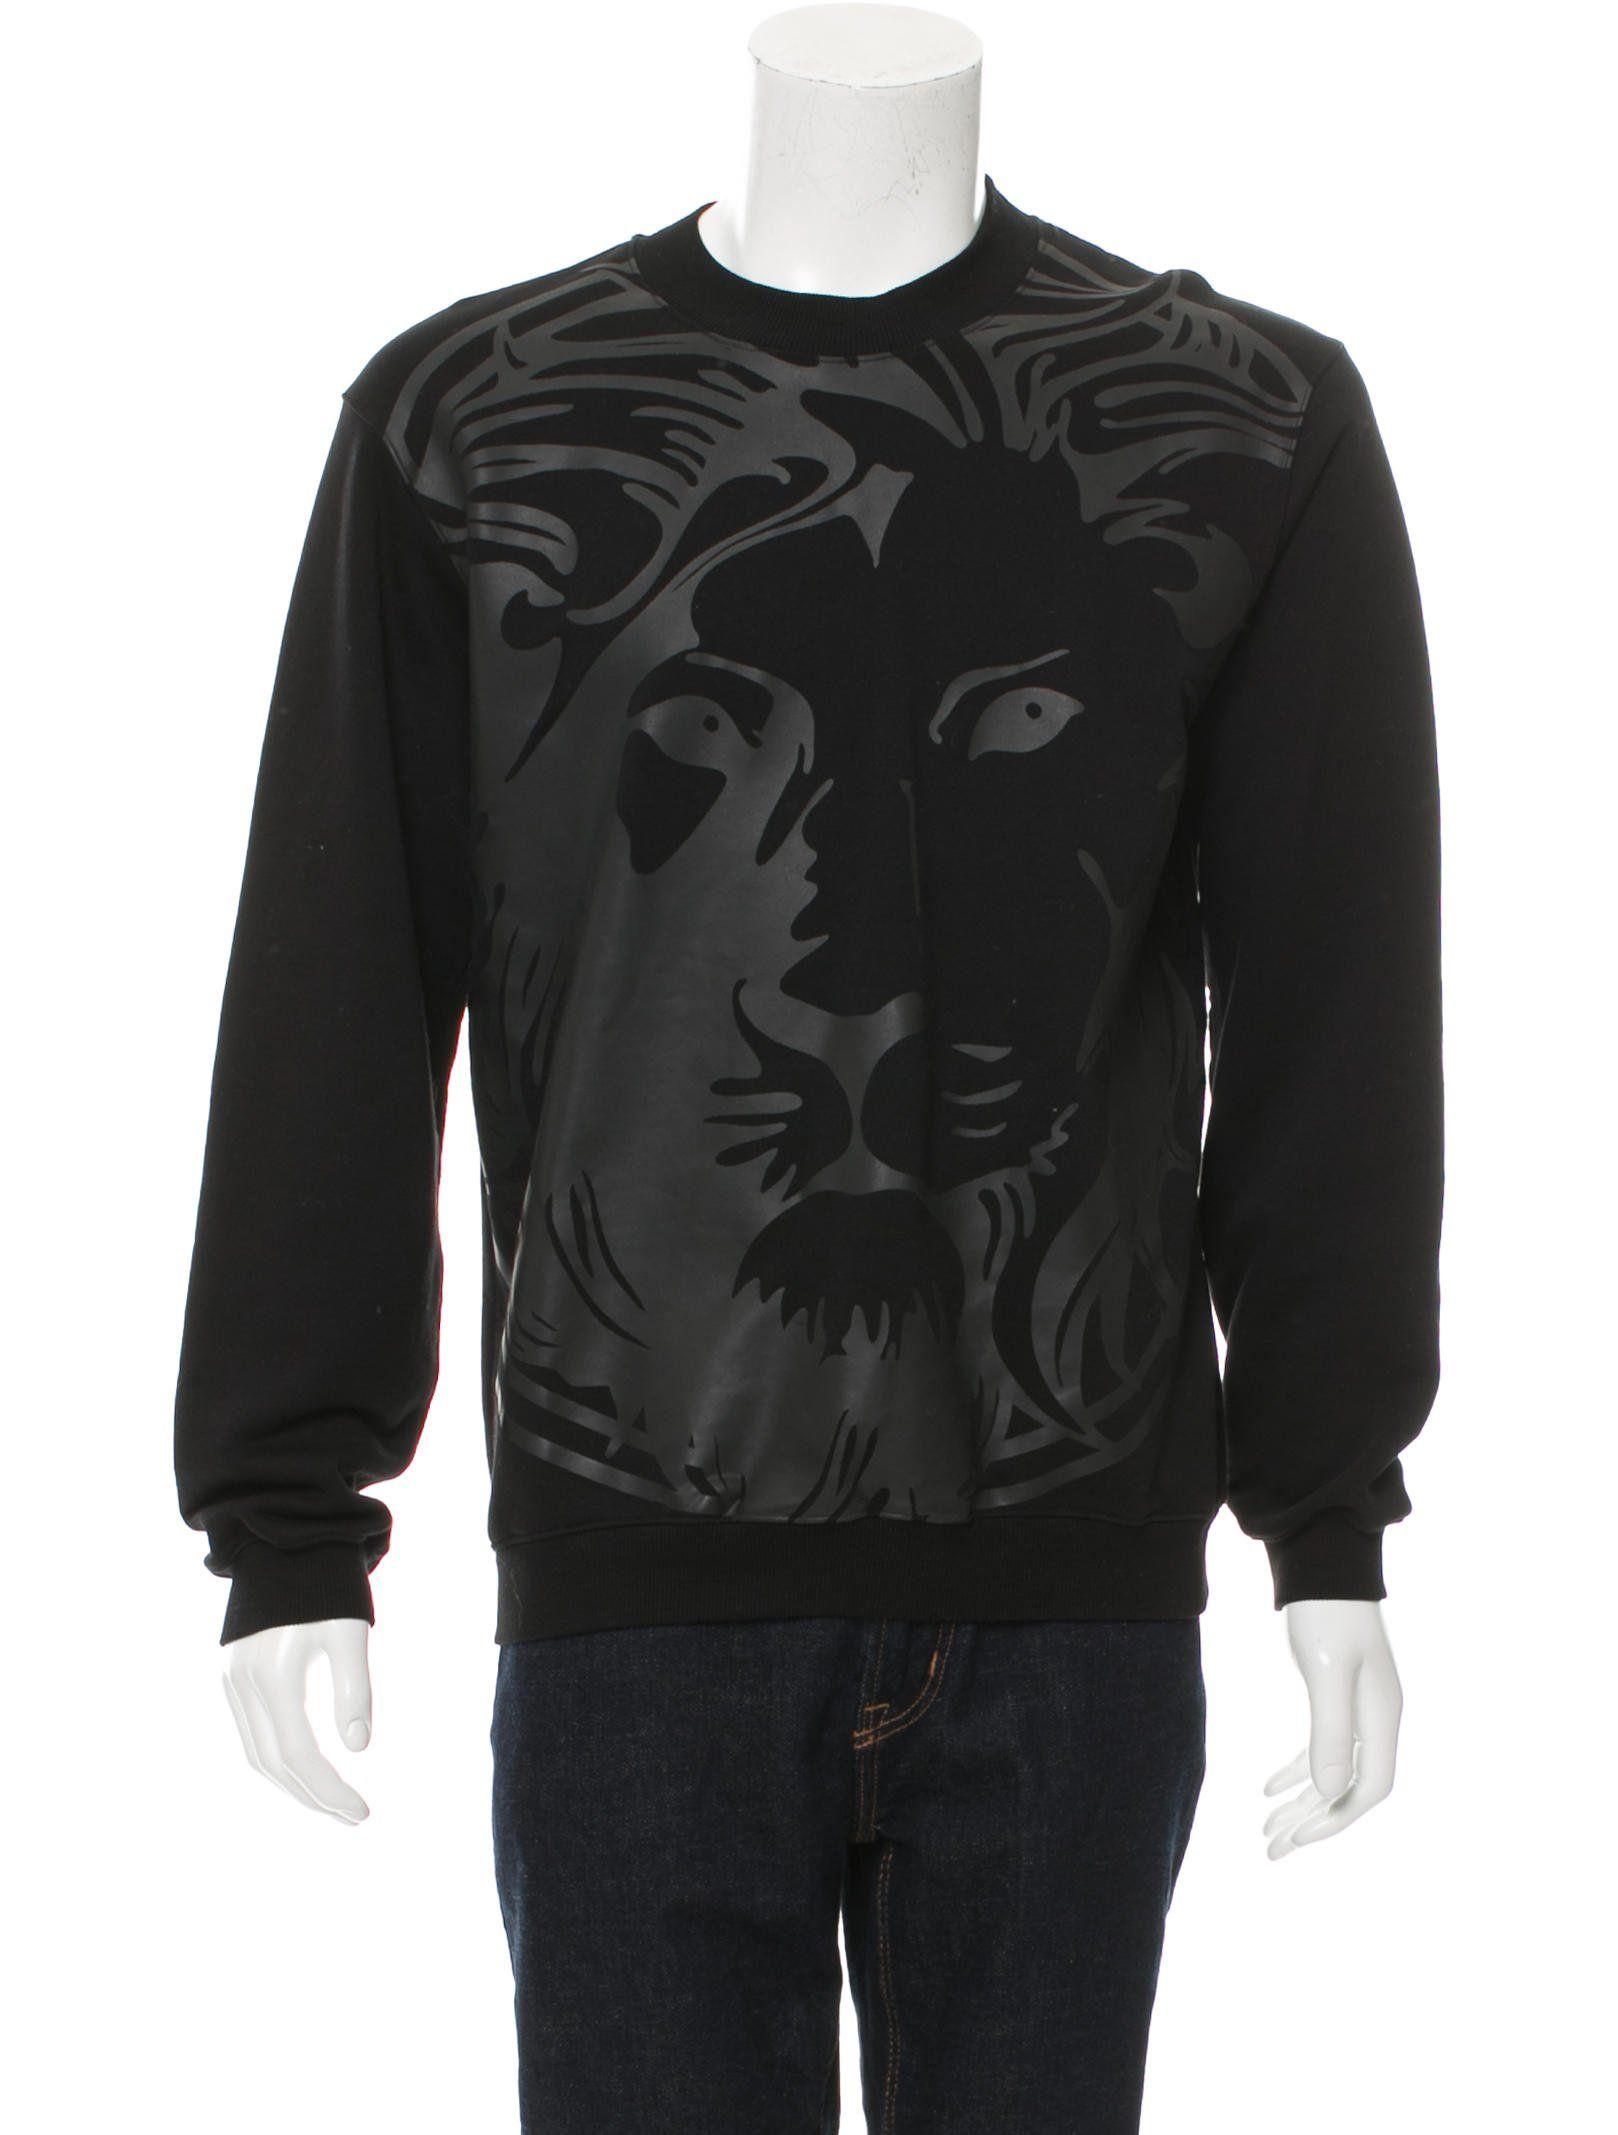 Clothing with Lion Logo - Versus Lion Logo Crew Neck Sweatshirt